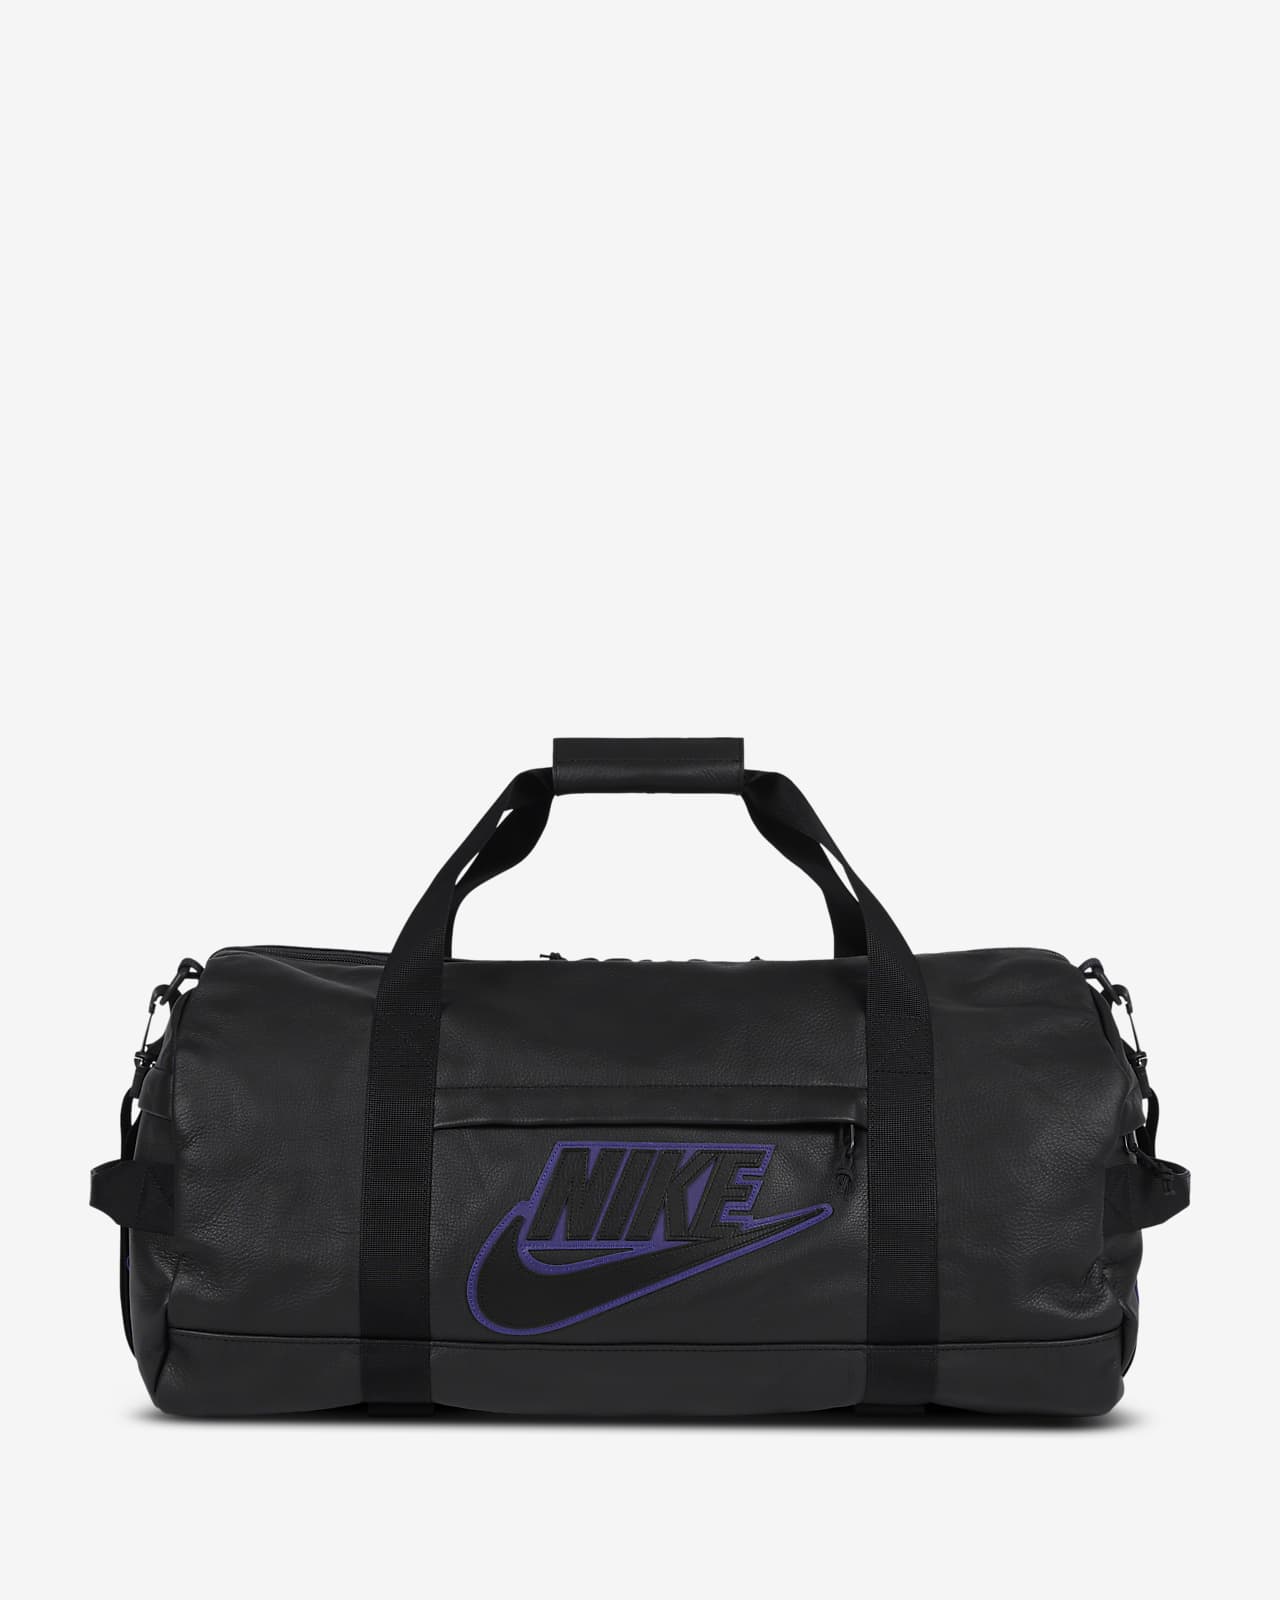 Supreme x Nike Duffle Bag - Farfetch